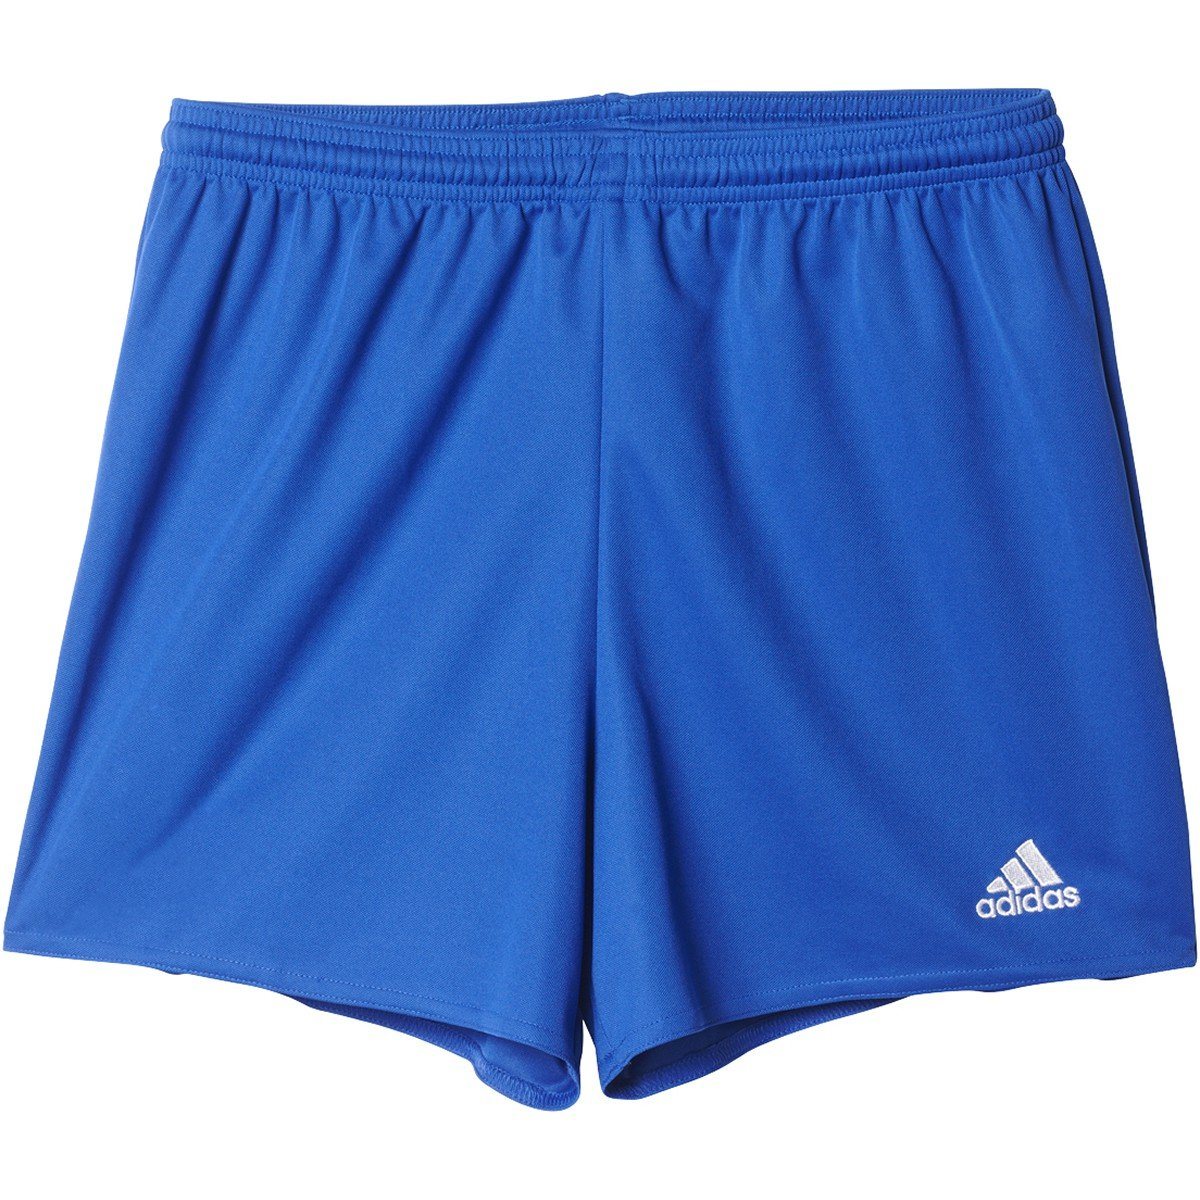 Adidas Women's Parma 16 Short Team Shorts Adidas Bold Blue/White X-Small 